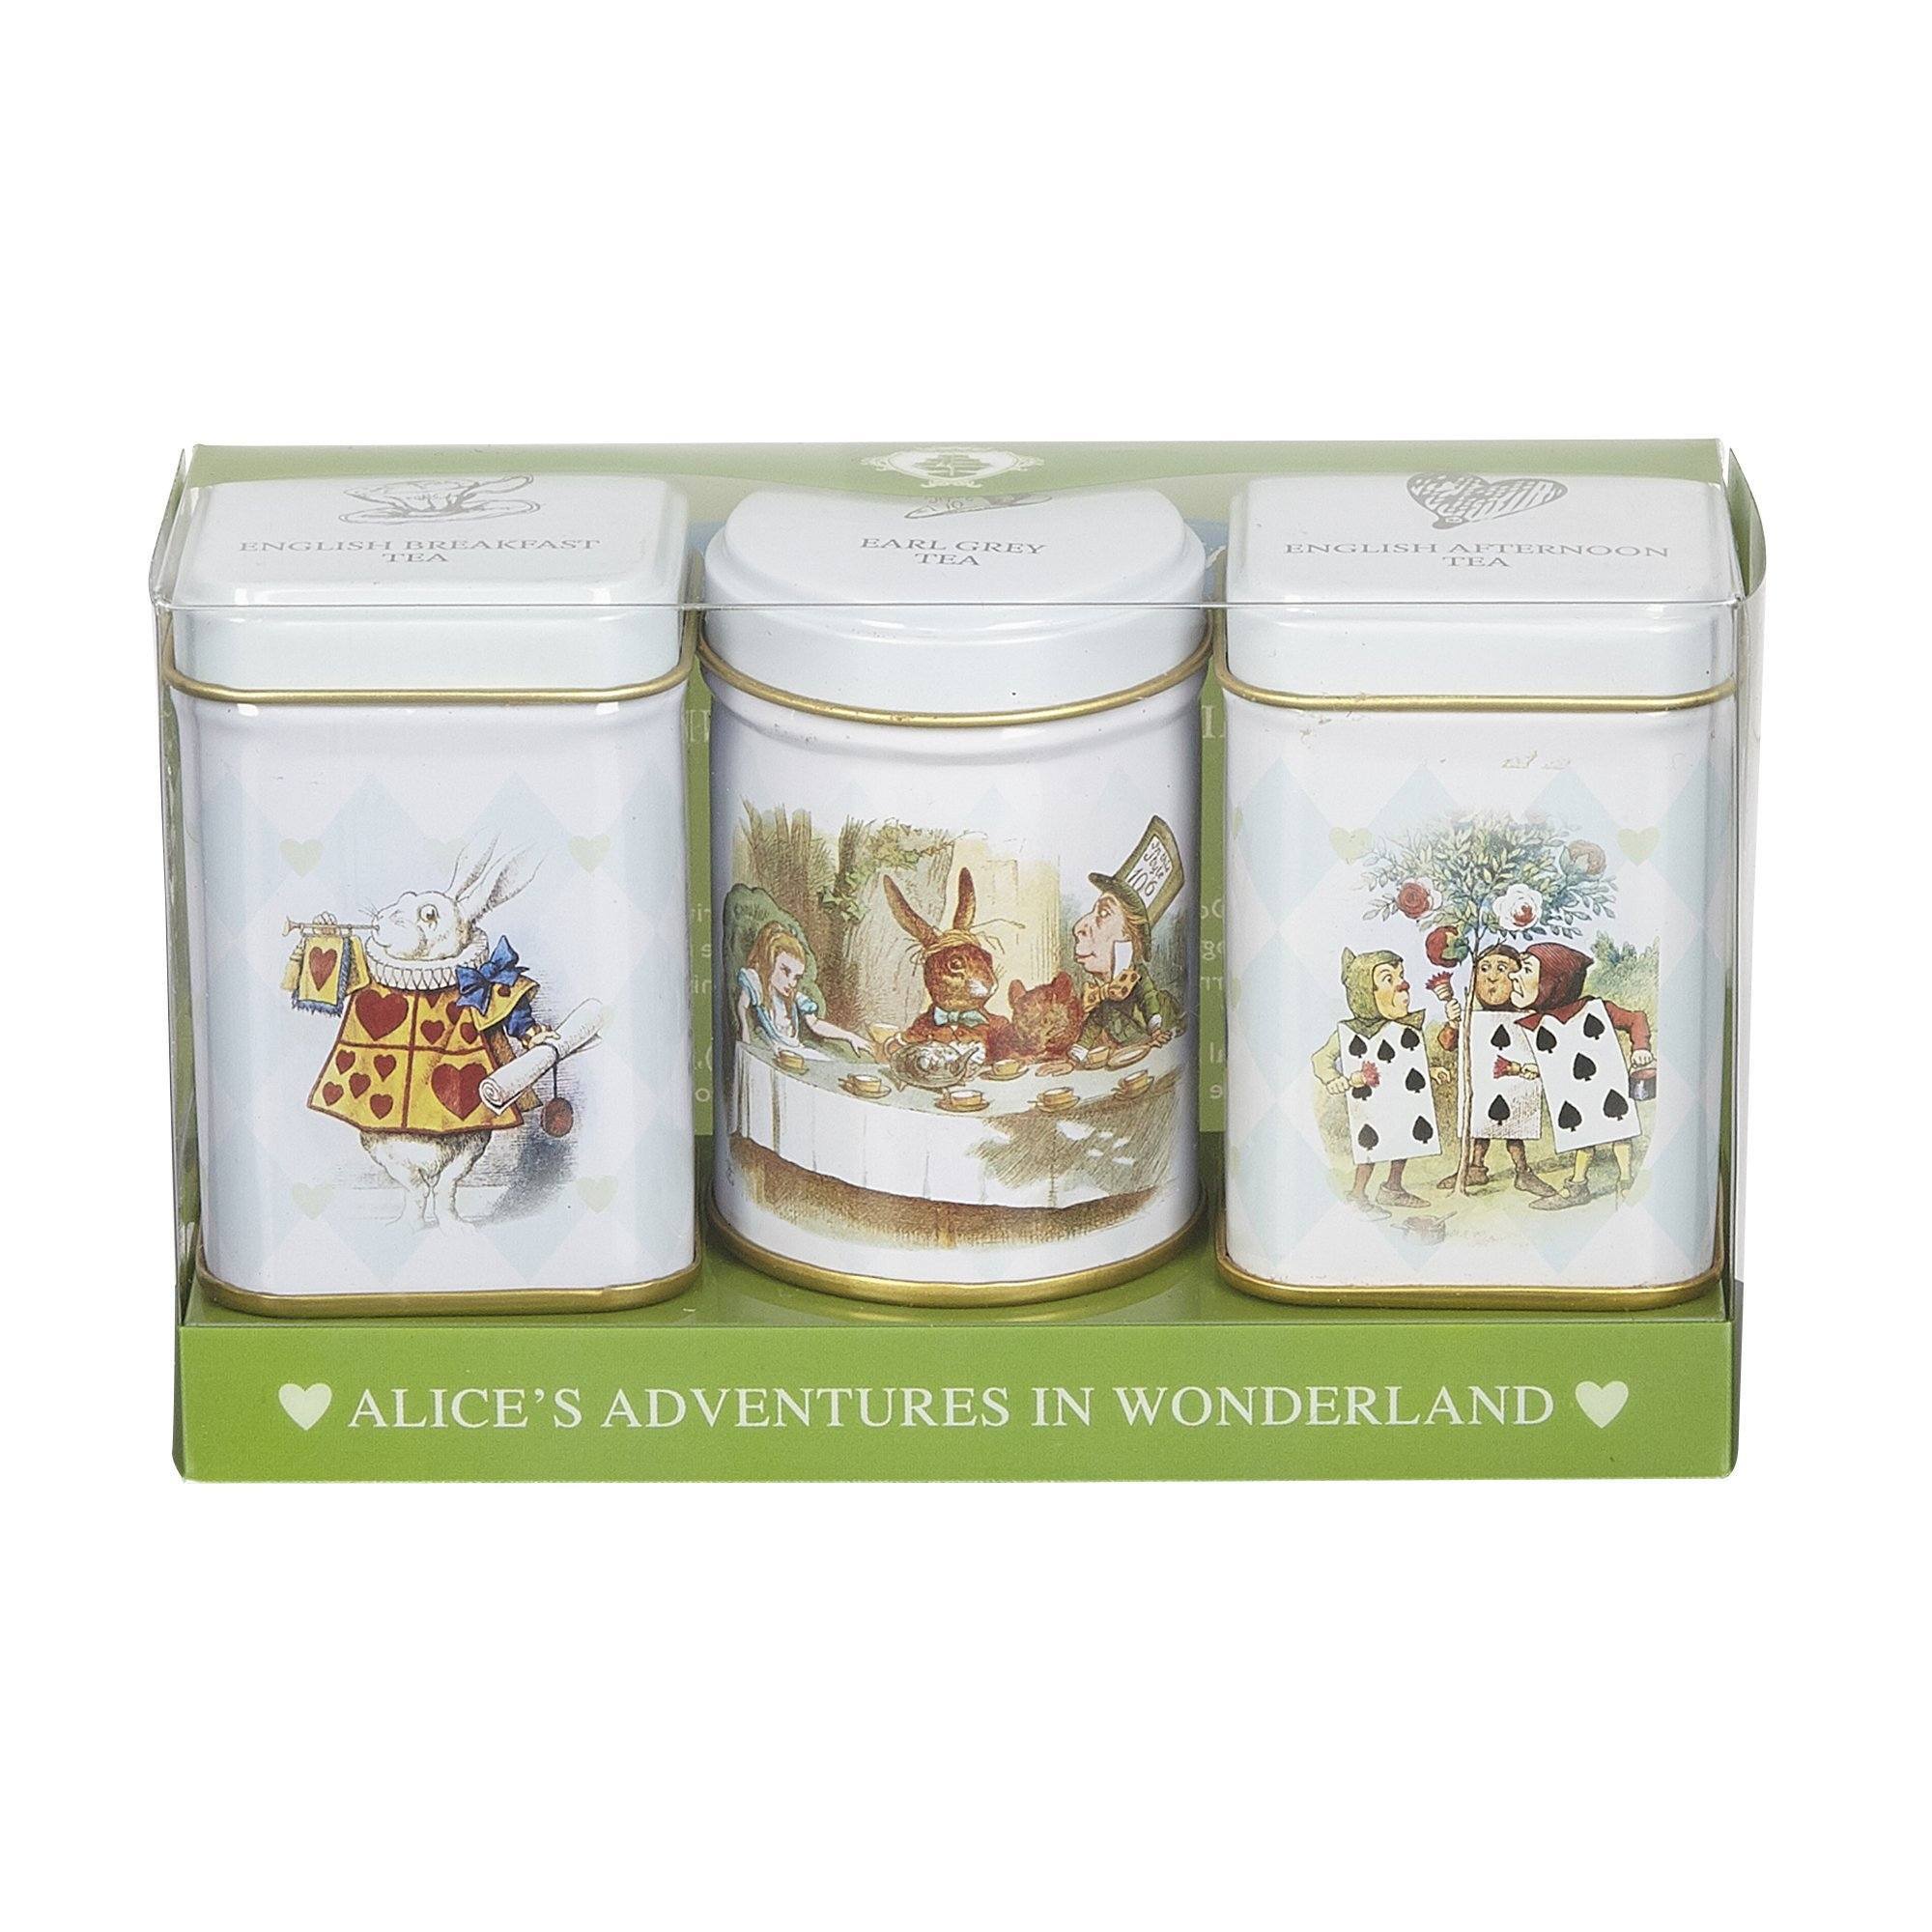 Alice in Wonderland Tea Tin Selection Gift Black Tea New English Teas 